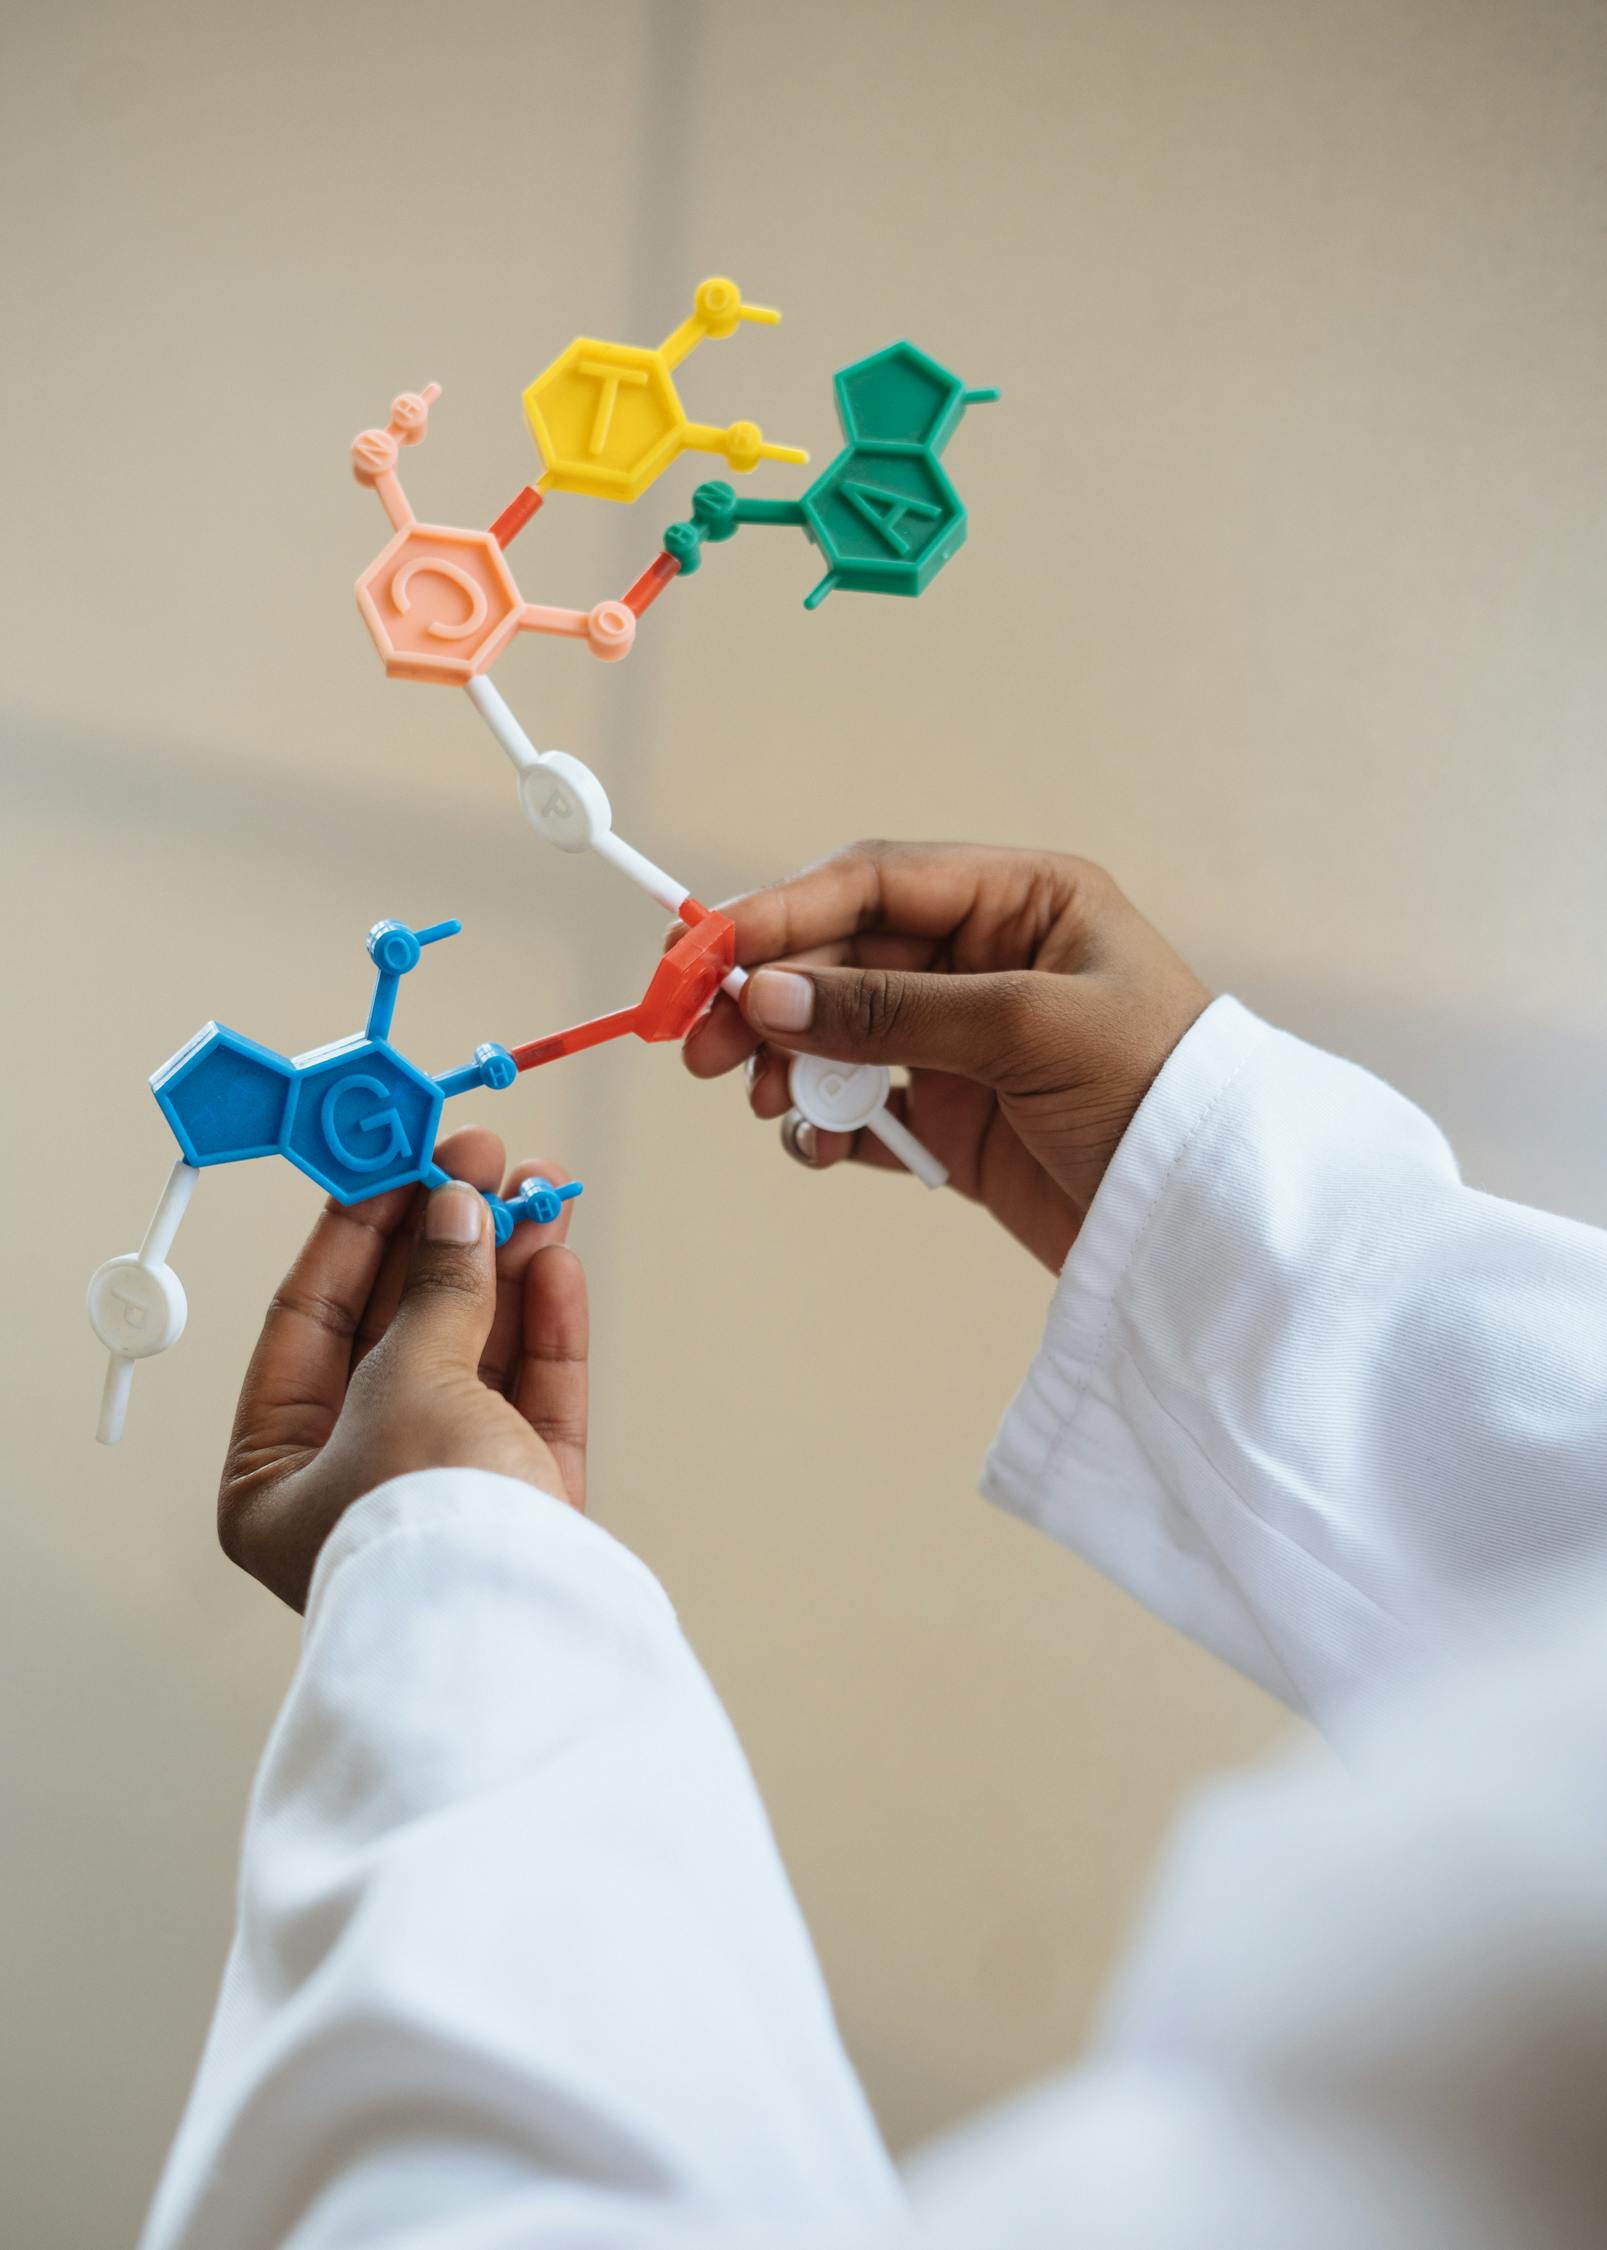 Crop chemist holding in hands molecule model